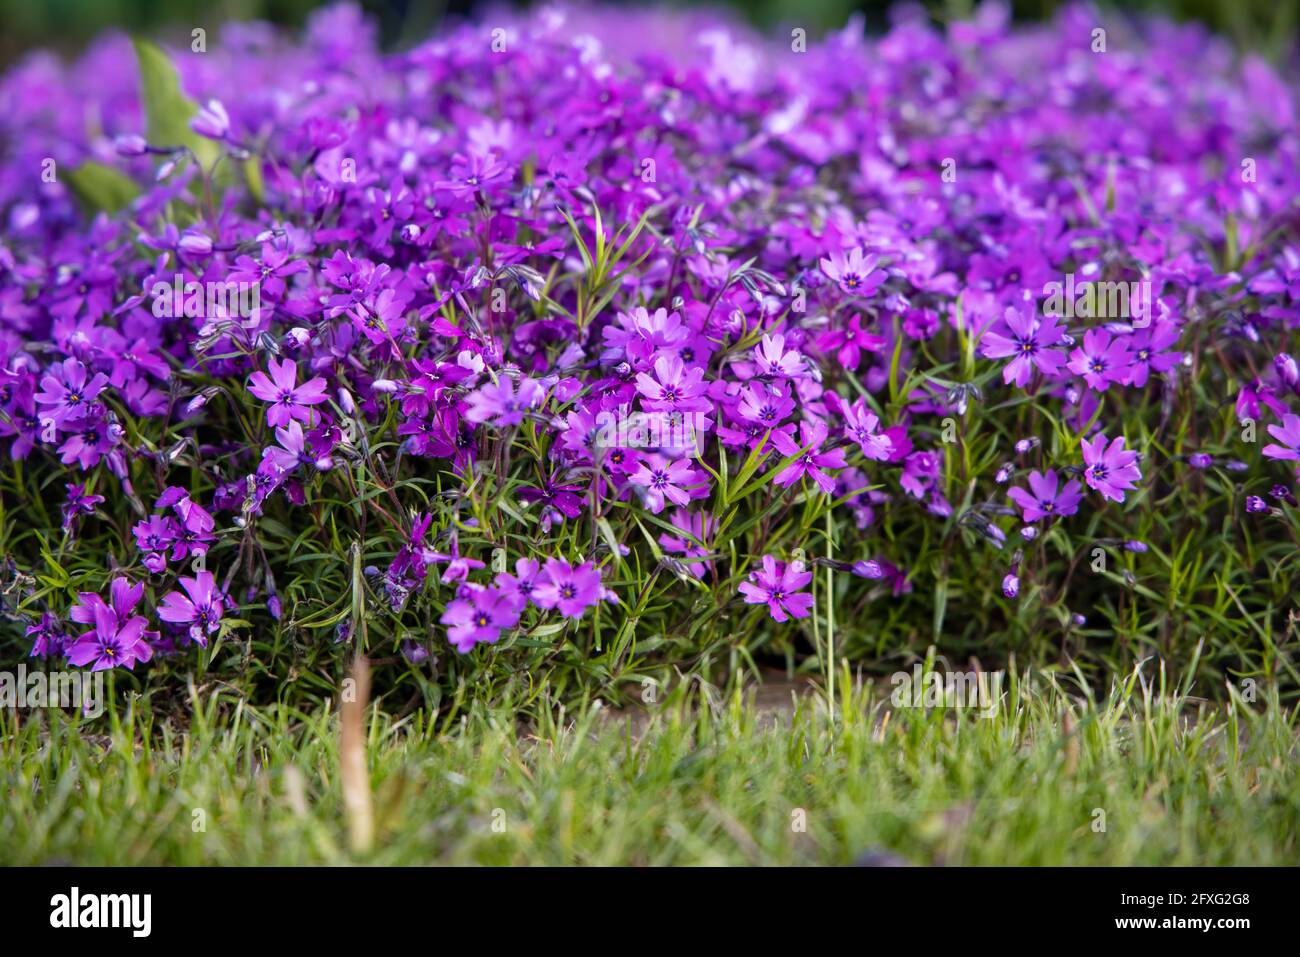 Phlox subulata purple beauty hi-res stock photography and images - Alamy